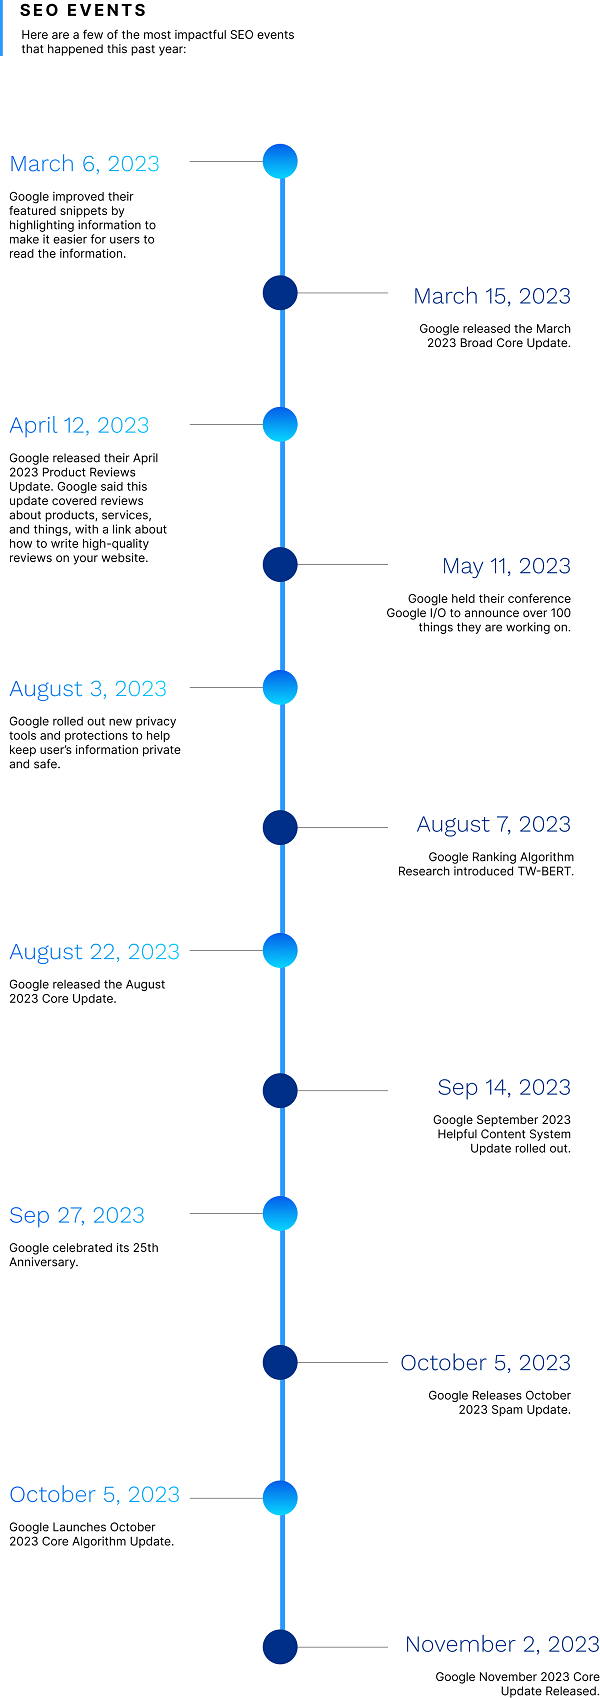 SEO Timeline - Digital Marketing Trends Report 2024